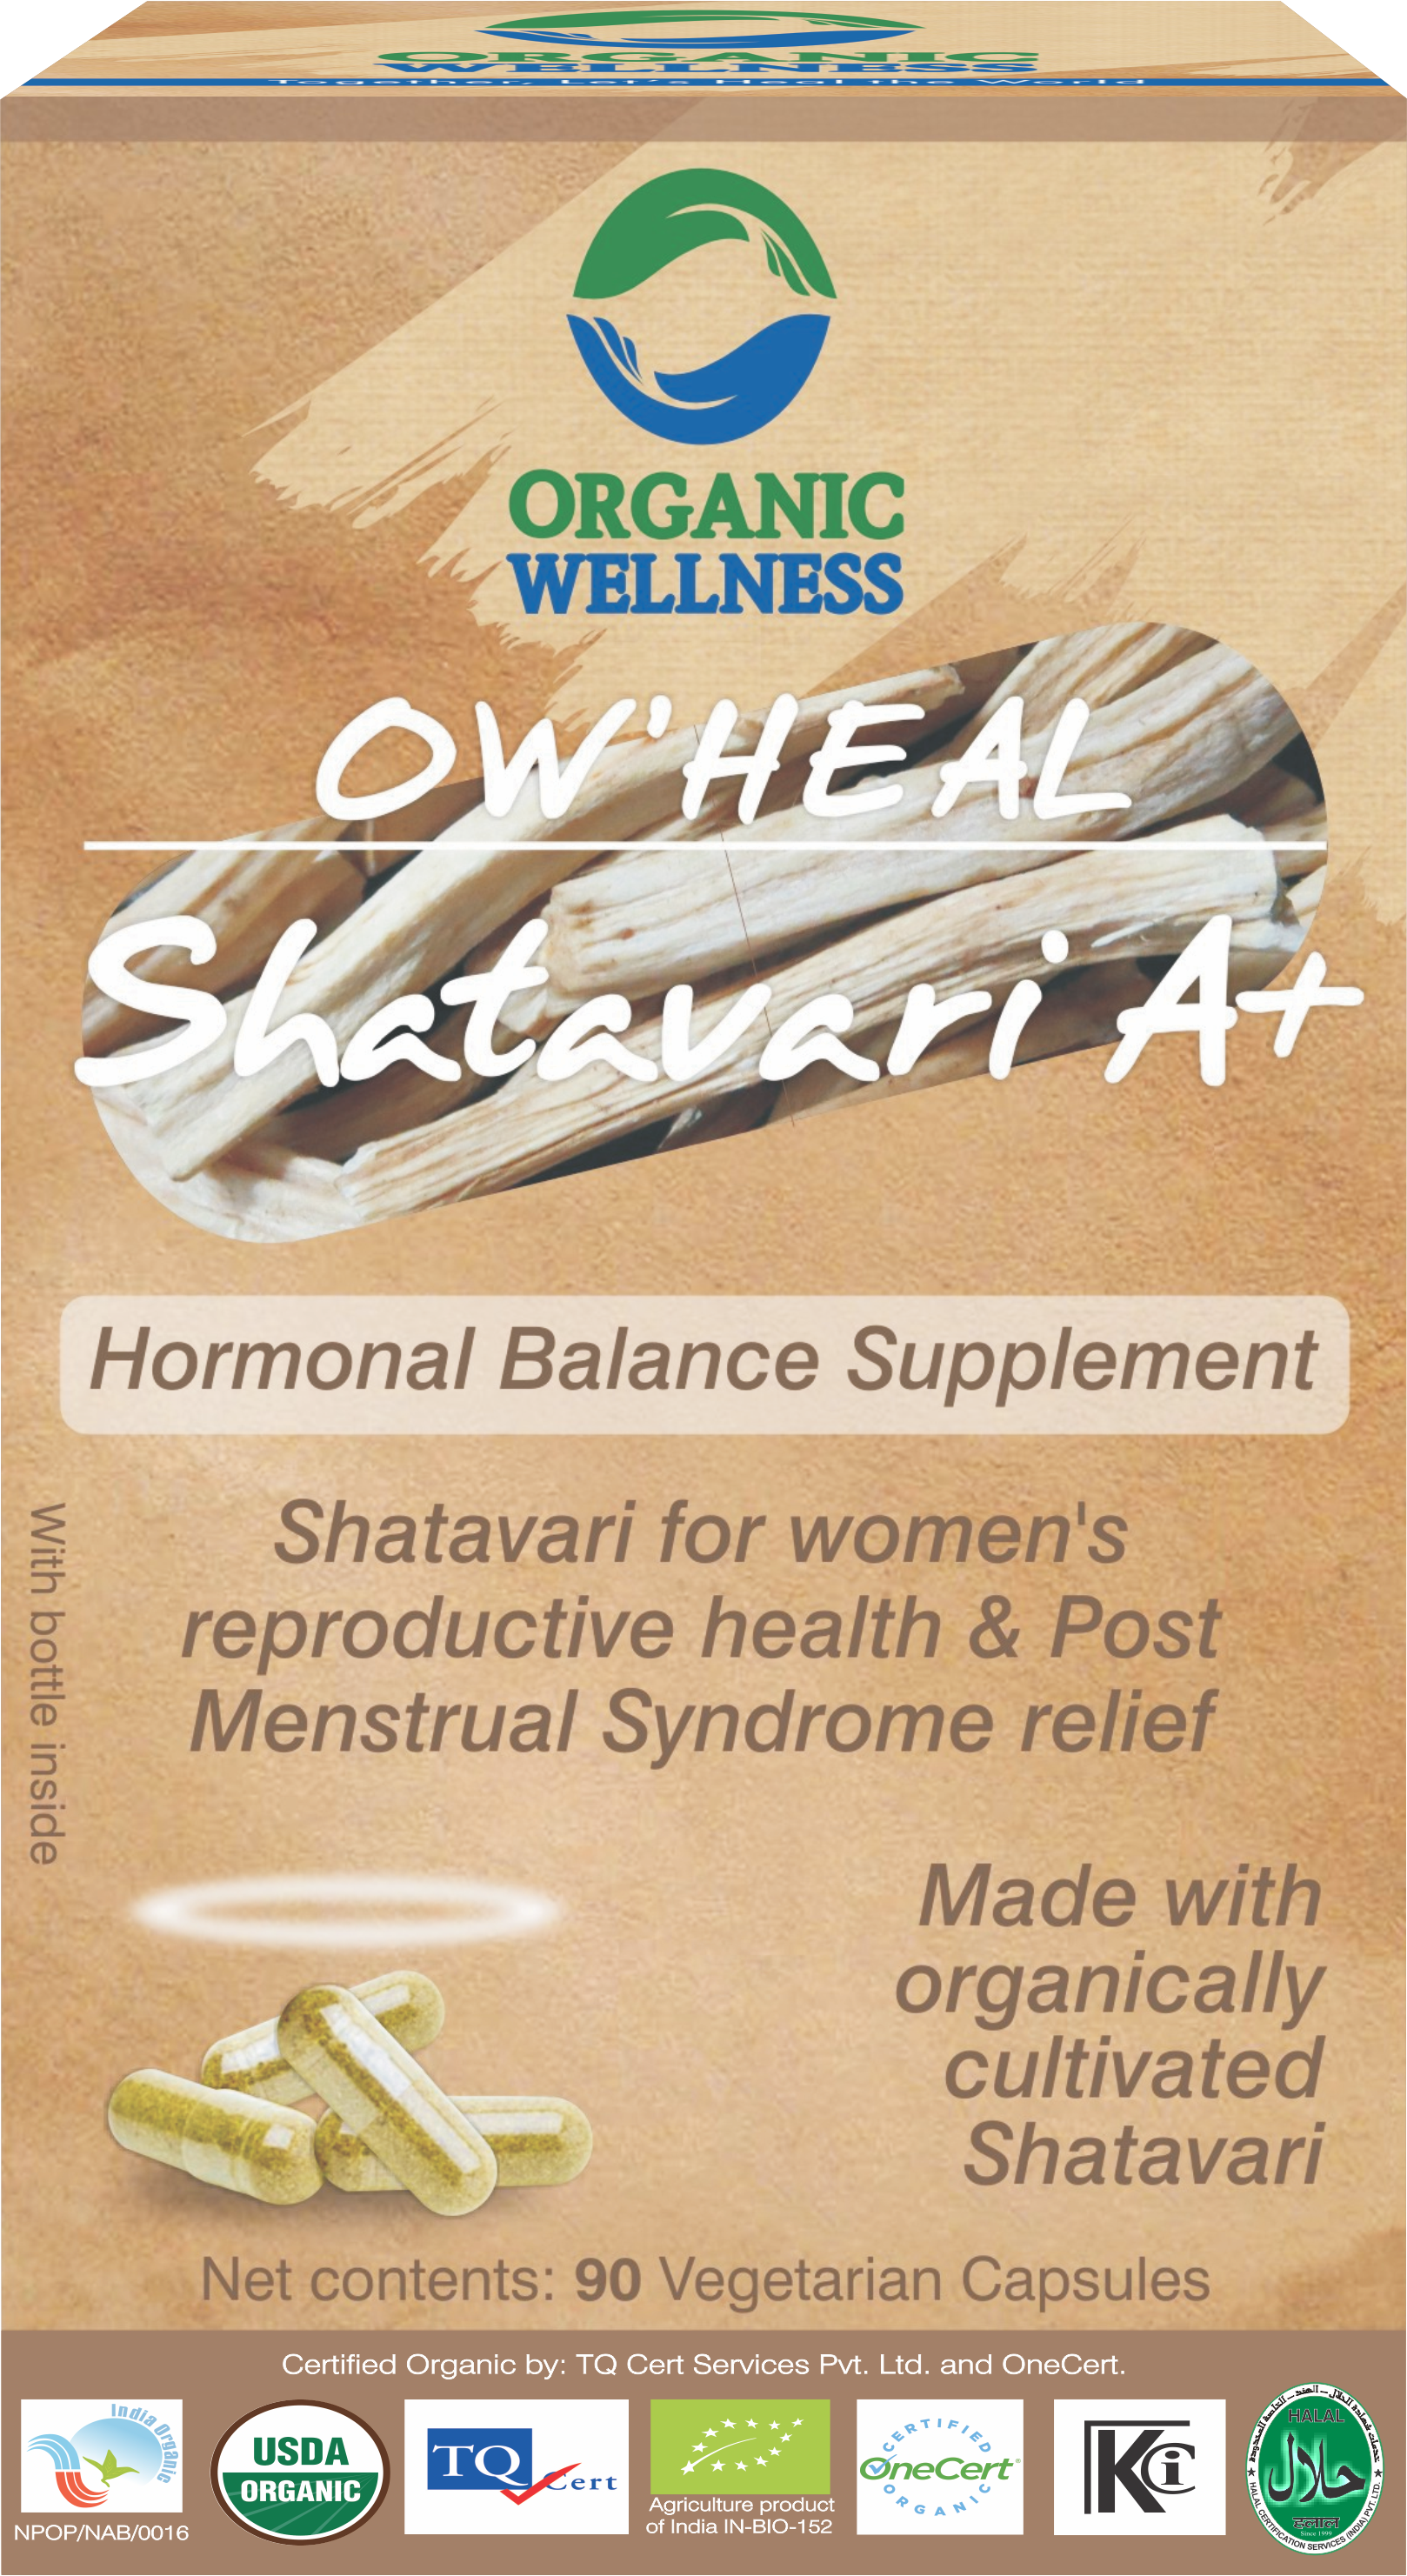 Organic Wellness Heal Shatavari A Plus Capsule